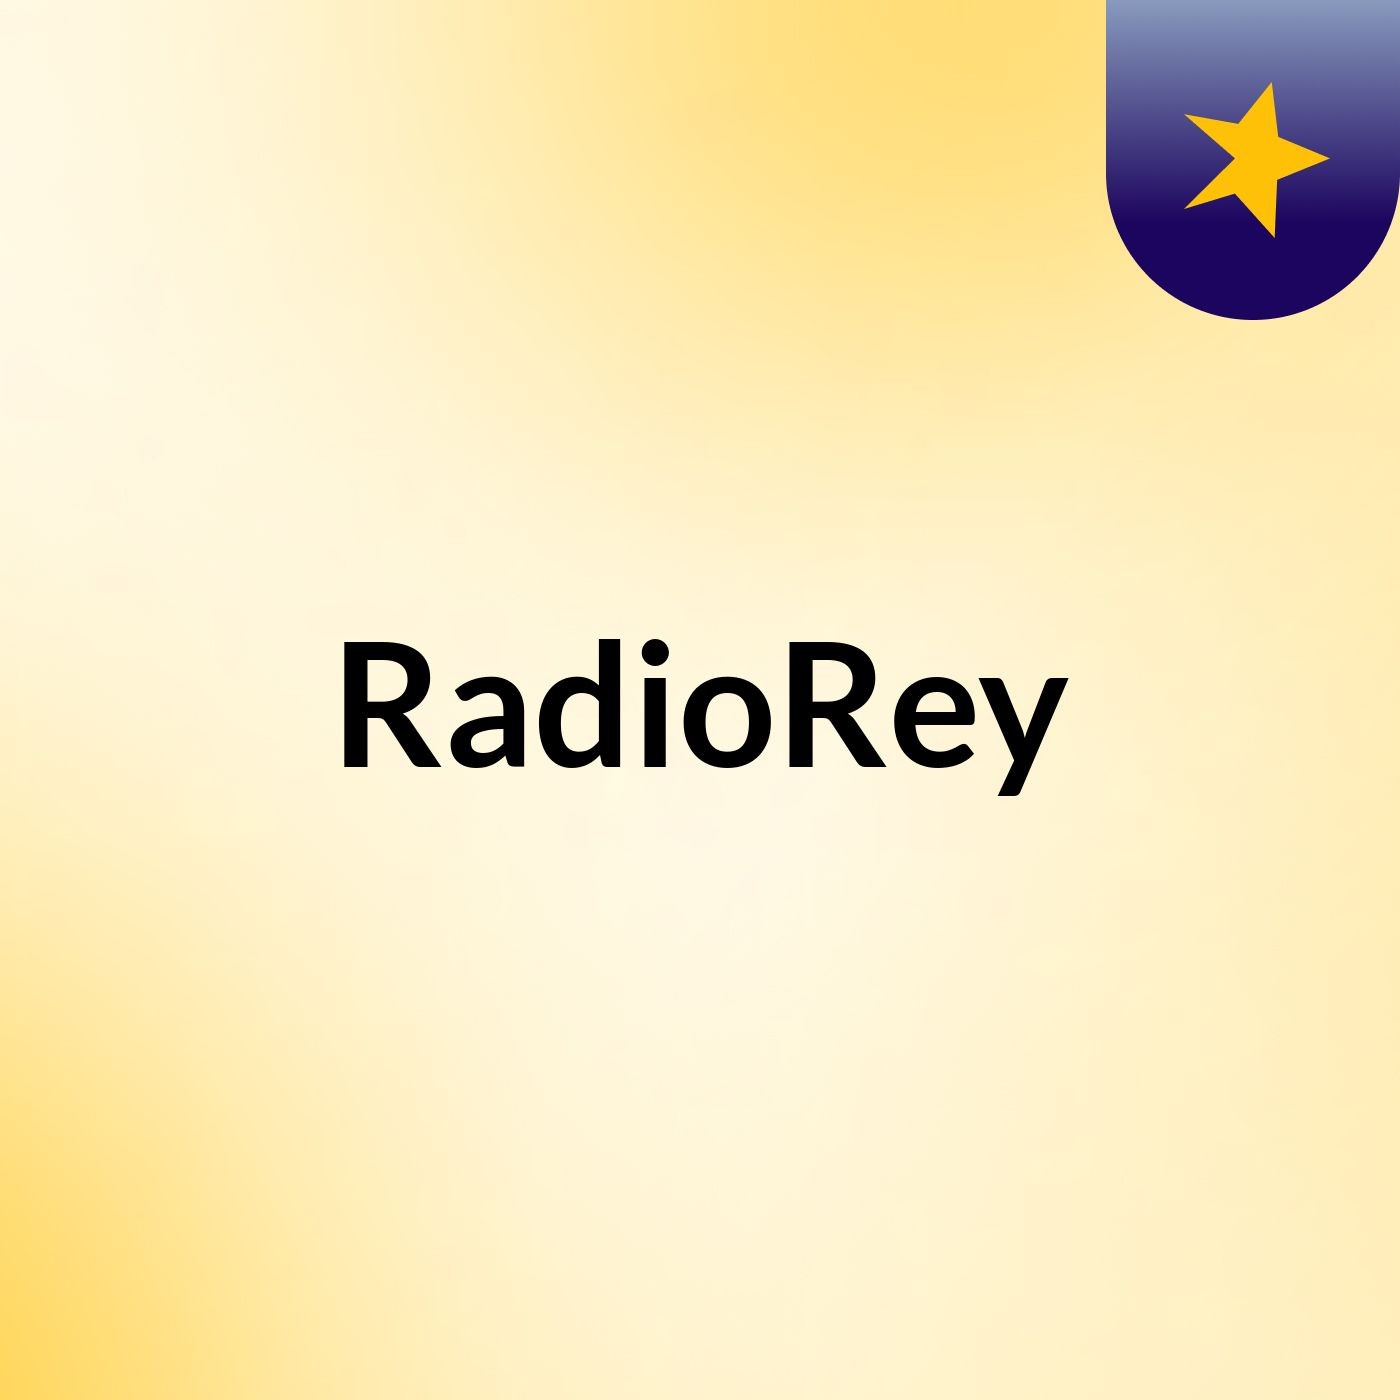 RadioRey